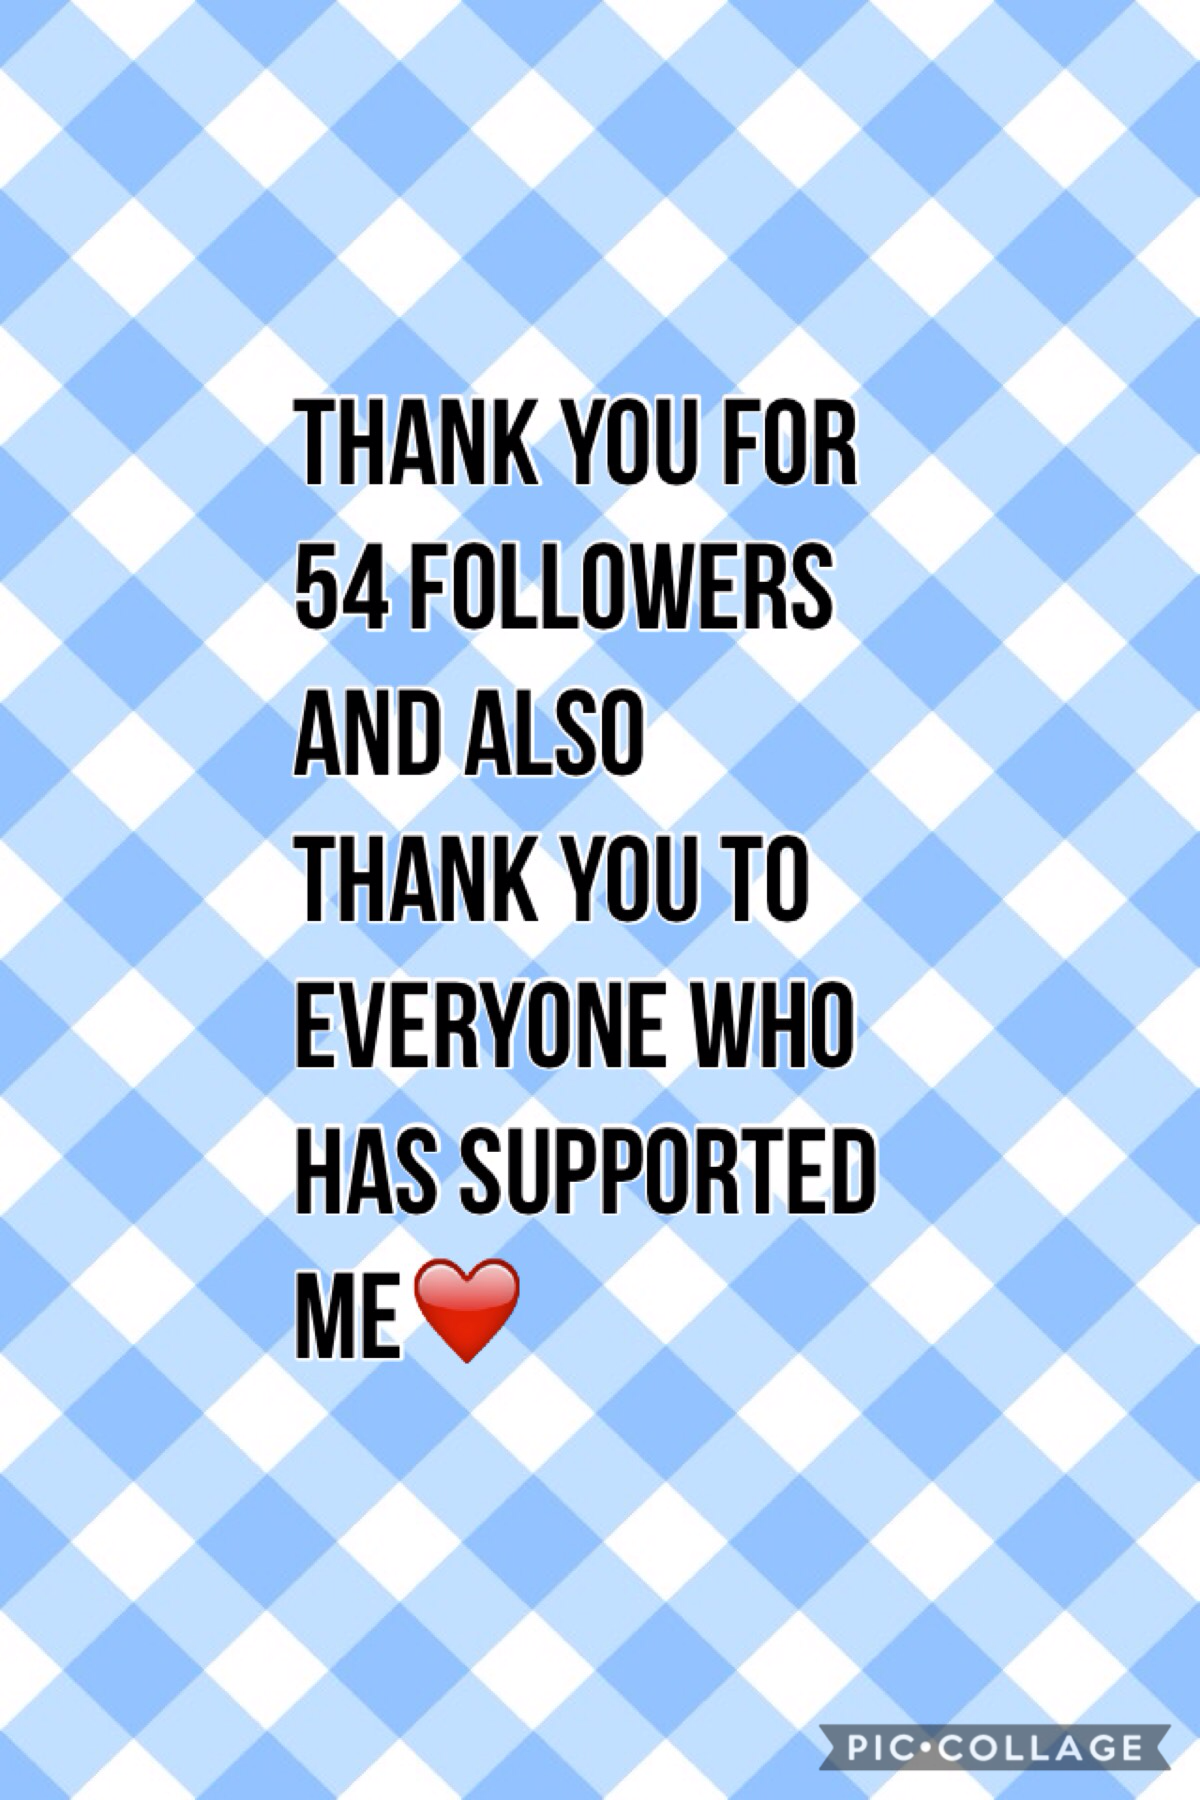 Thanks so much 😊